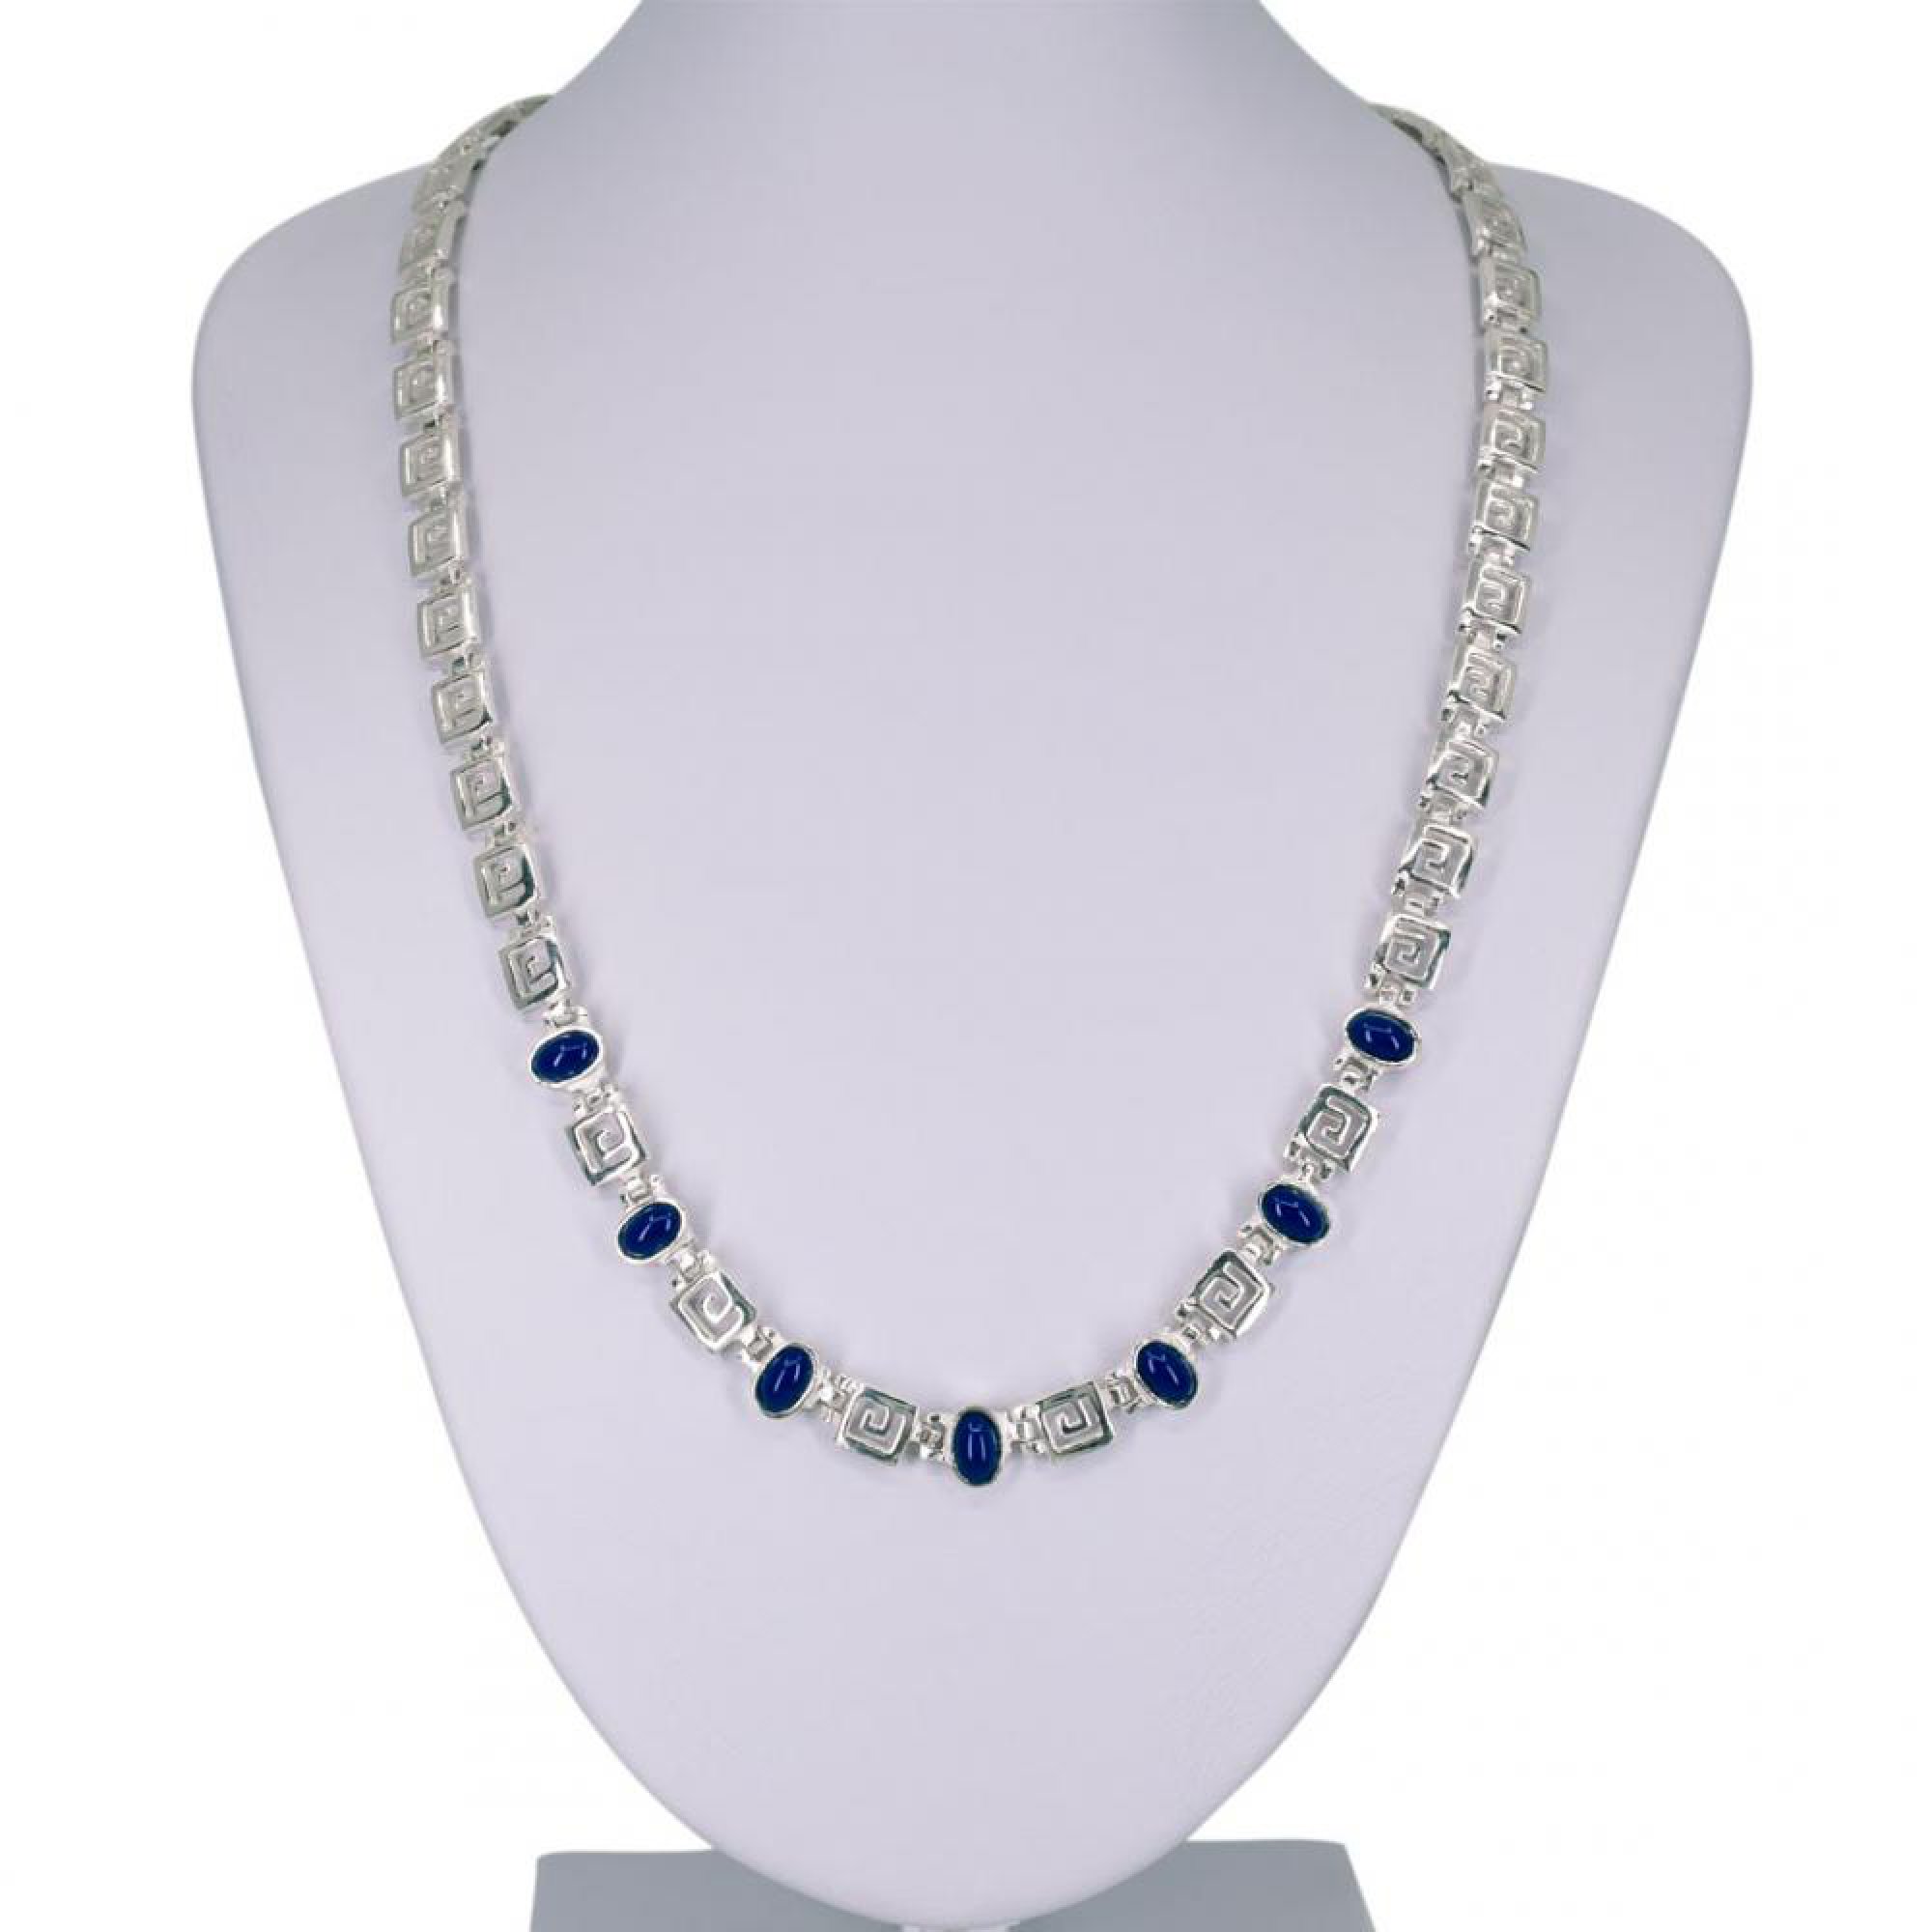 Meander necklace with lapis lazuli stones